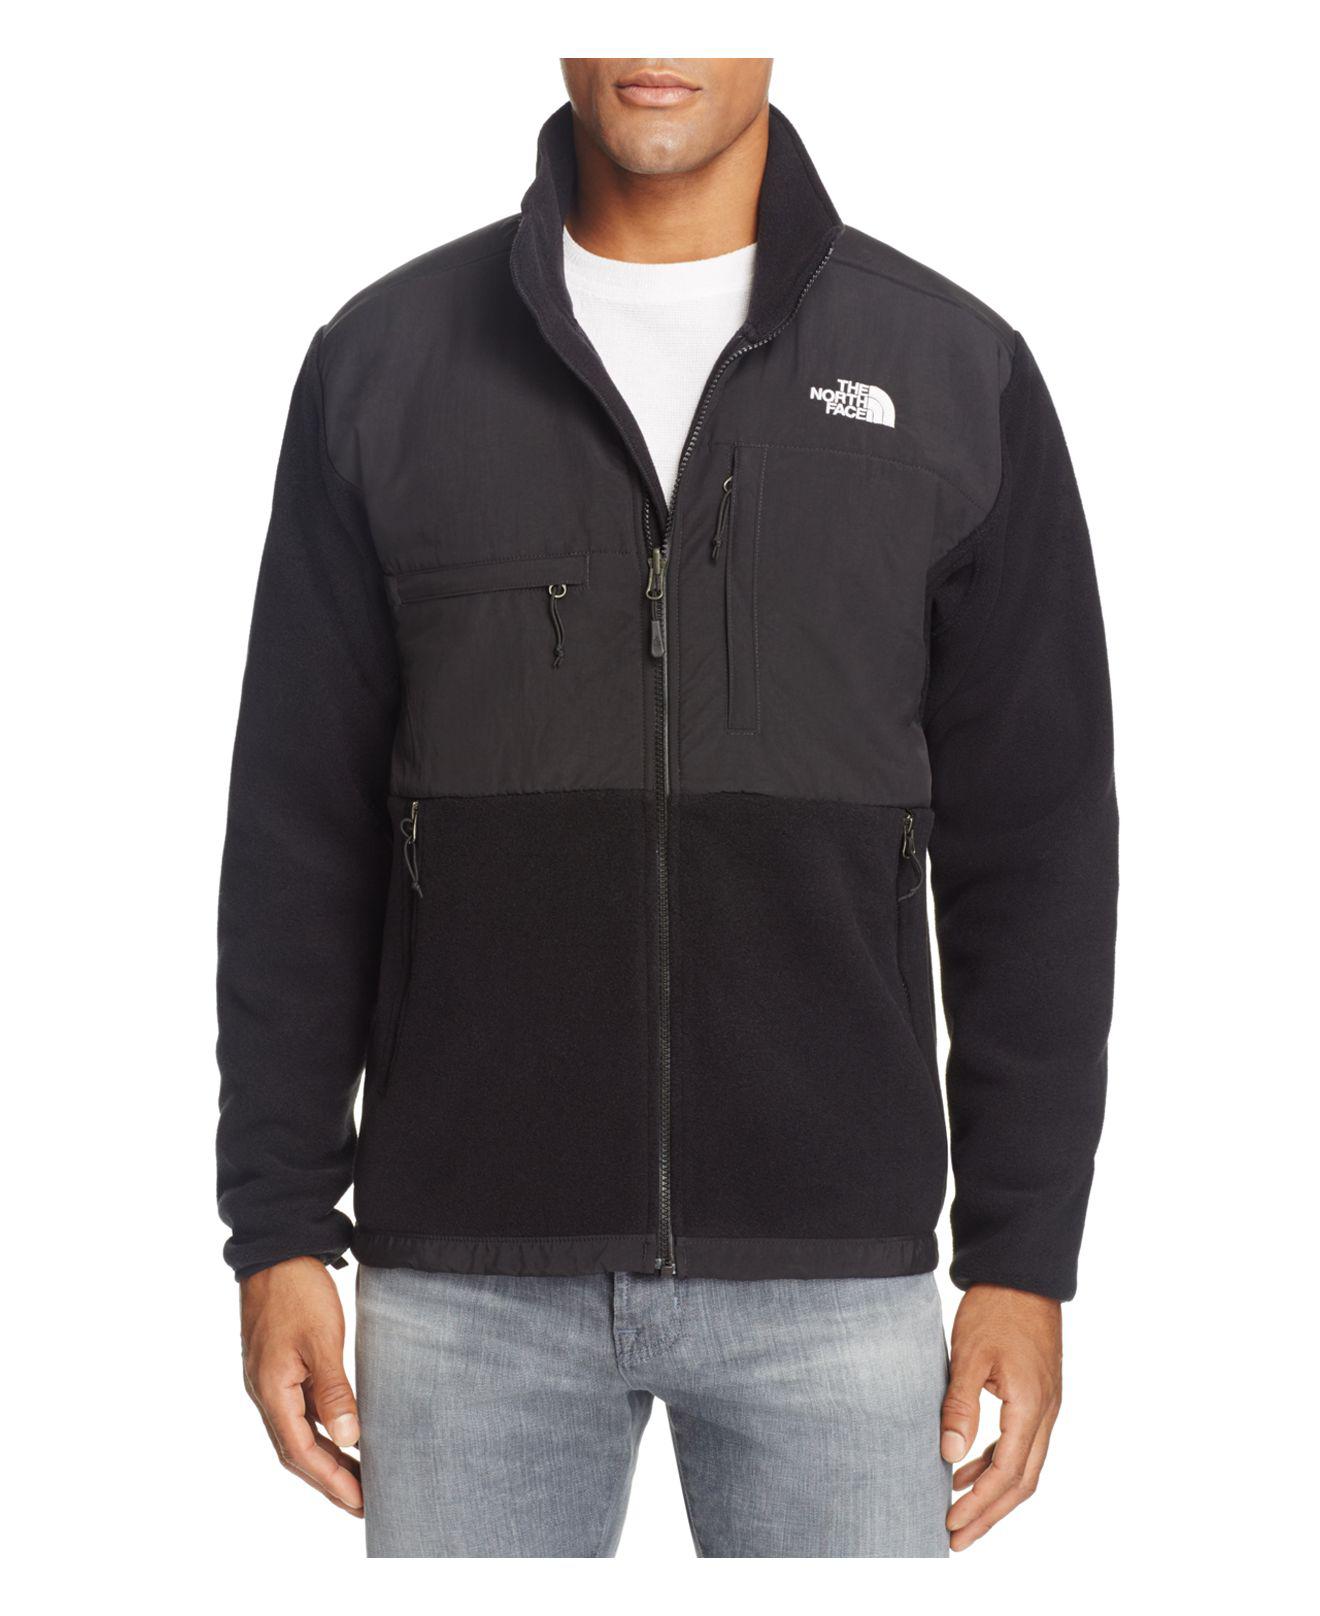 Lyst - The North Face Denali Zip Fleece Jacket in Black for Men